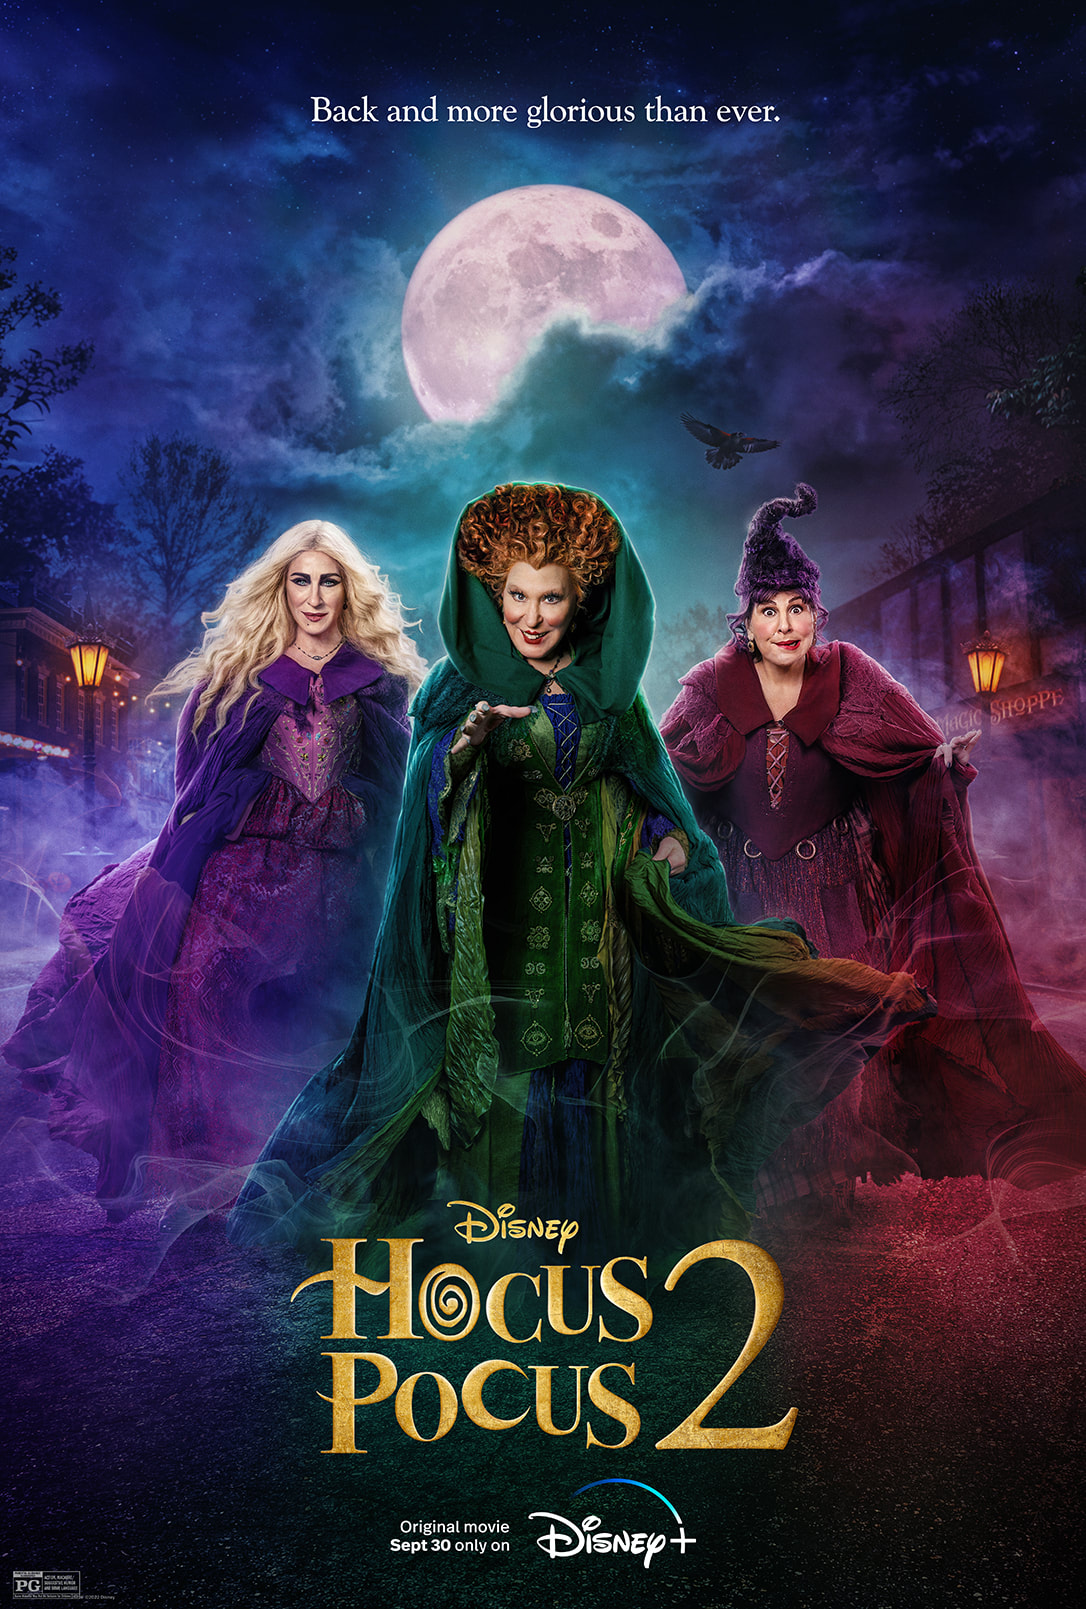 Hocus Pocus 2 streaming on Disney+ September 30th